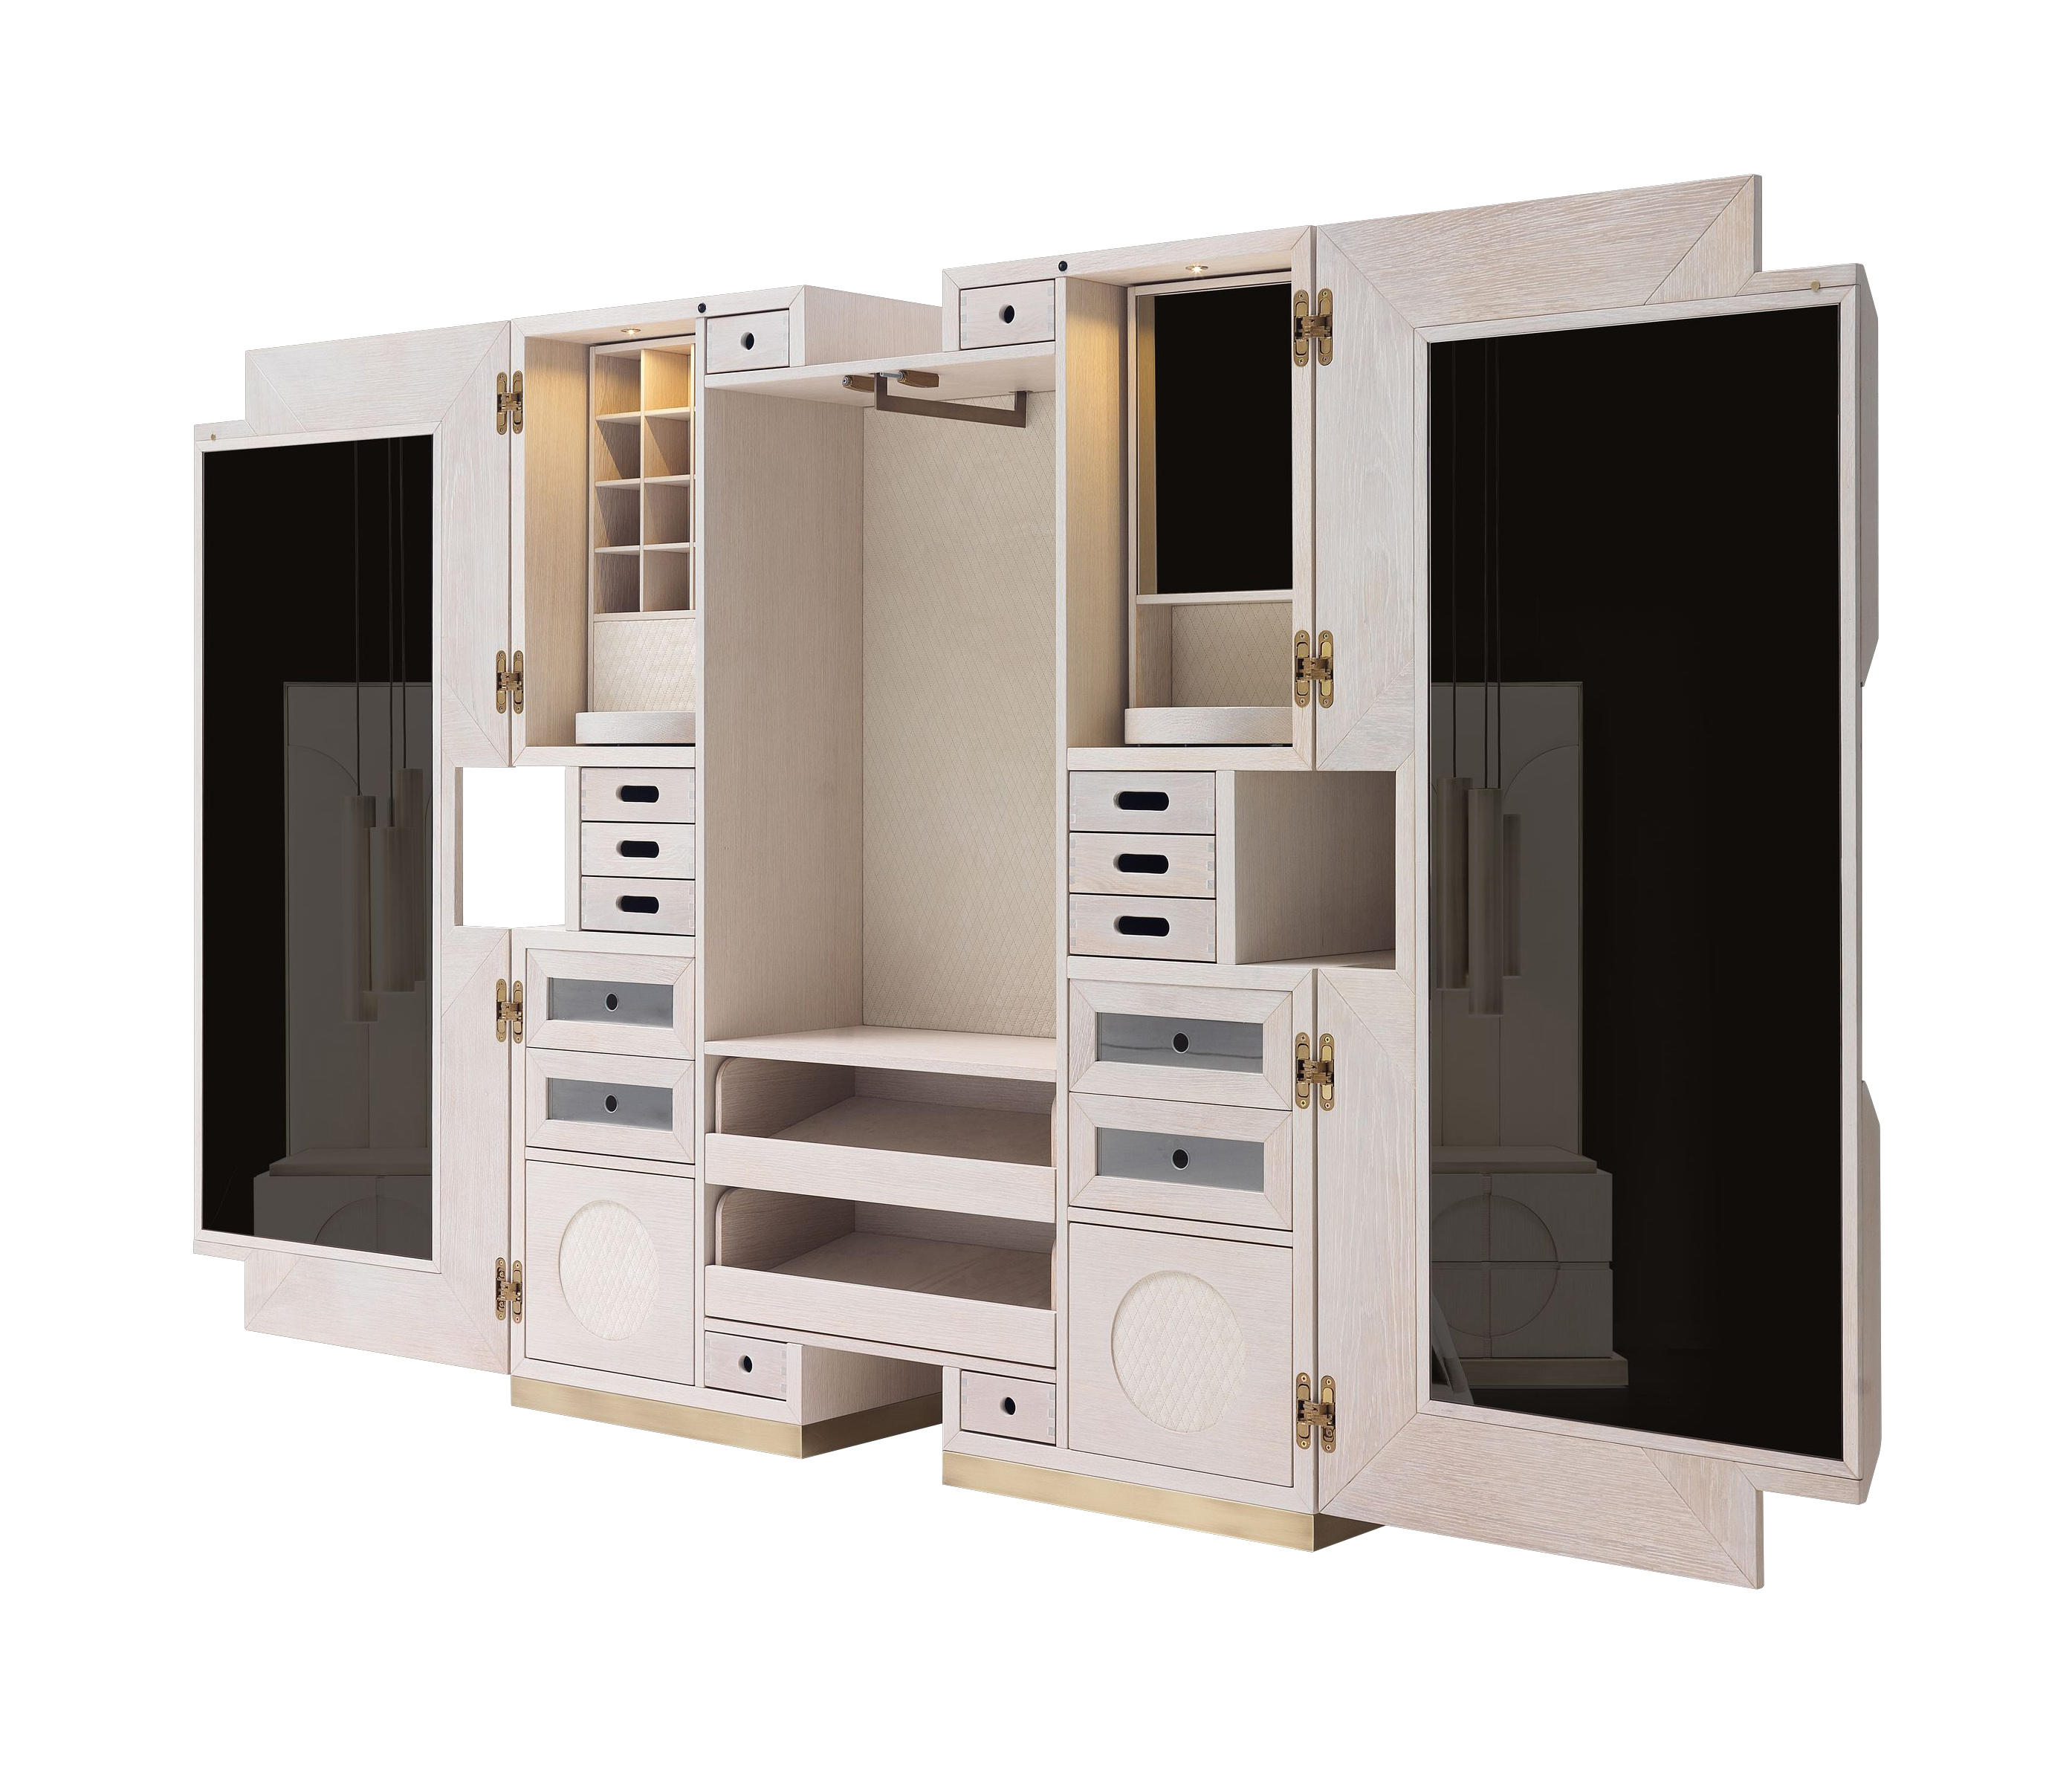 Verona Dresser Cabinets From Mobilfresno Alternative Architonic